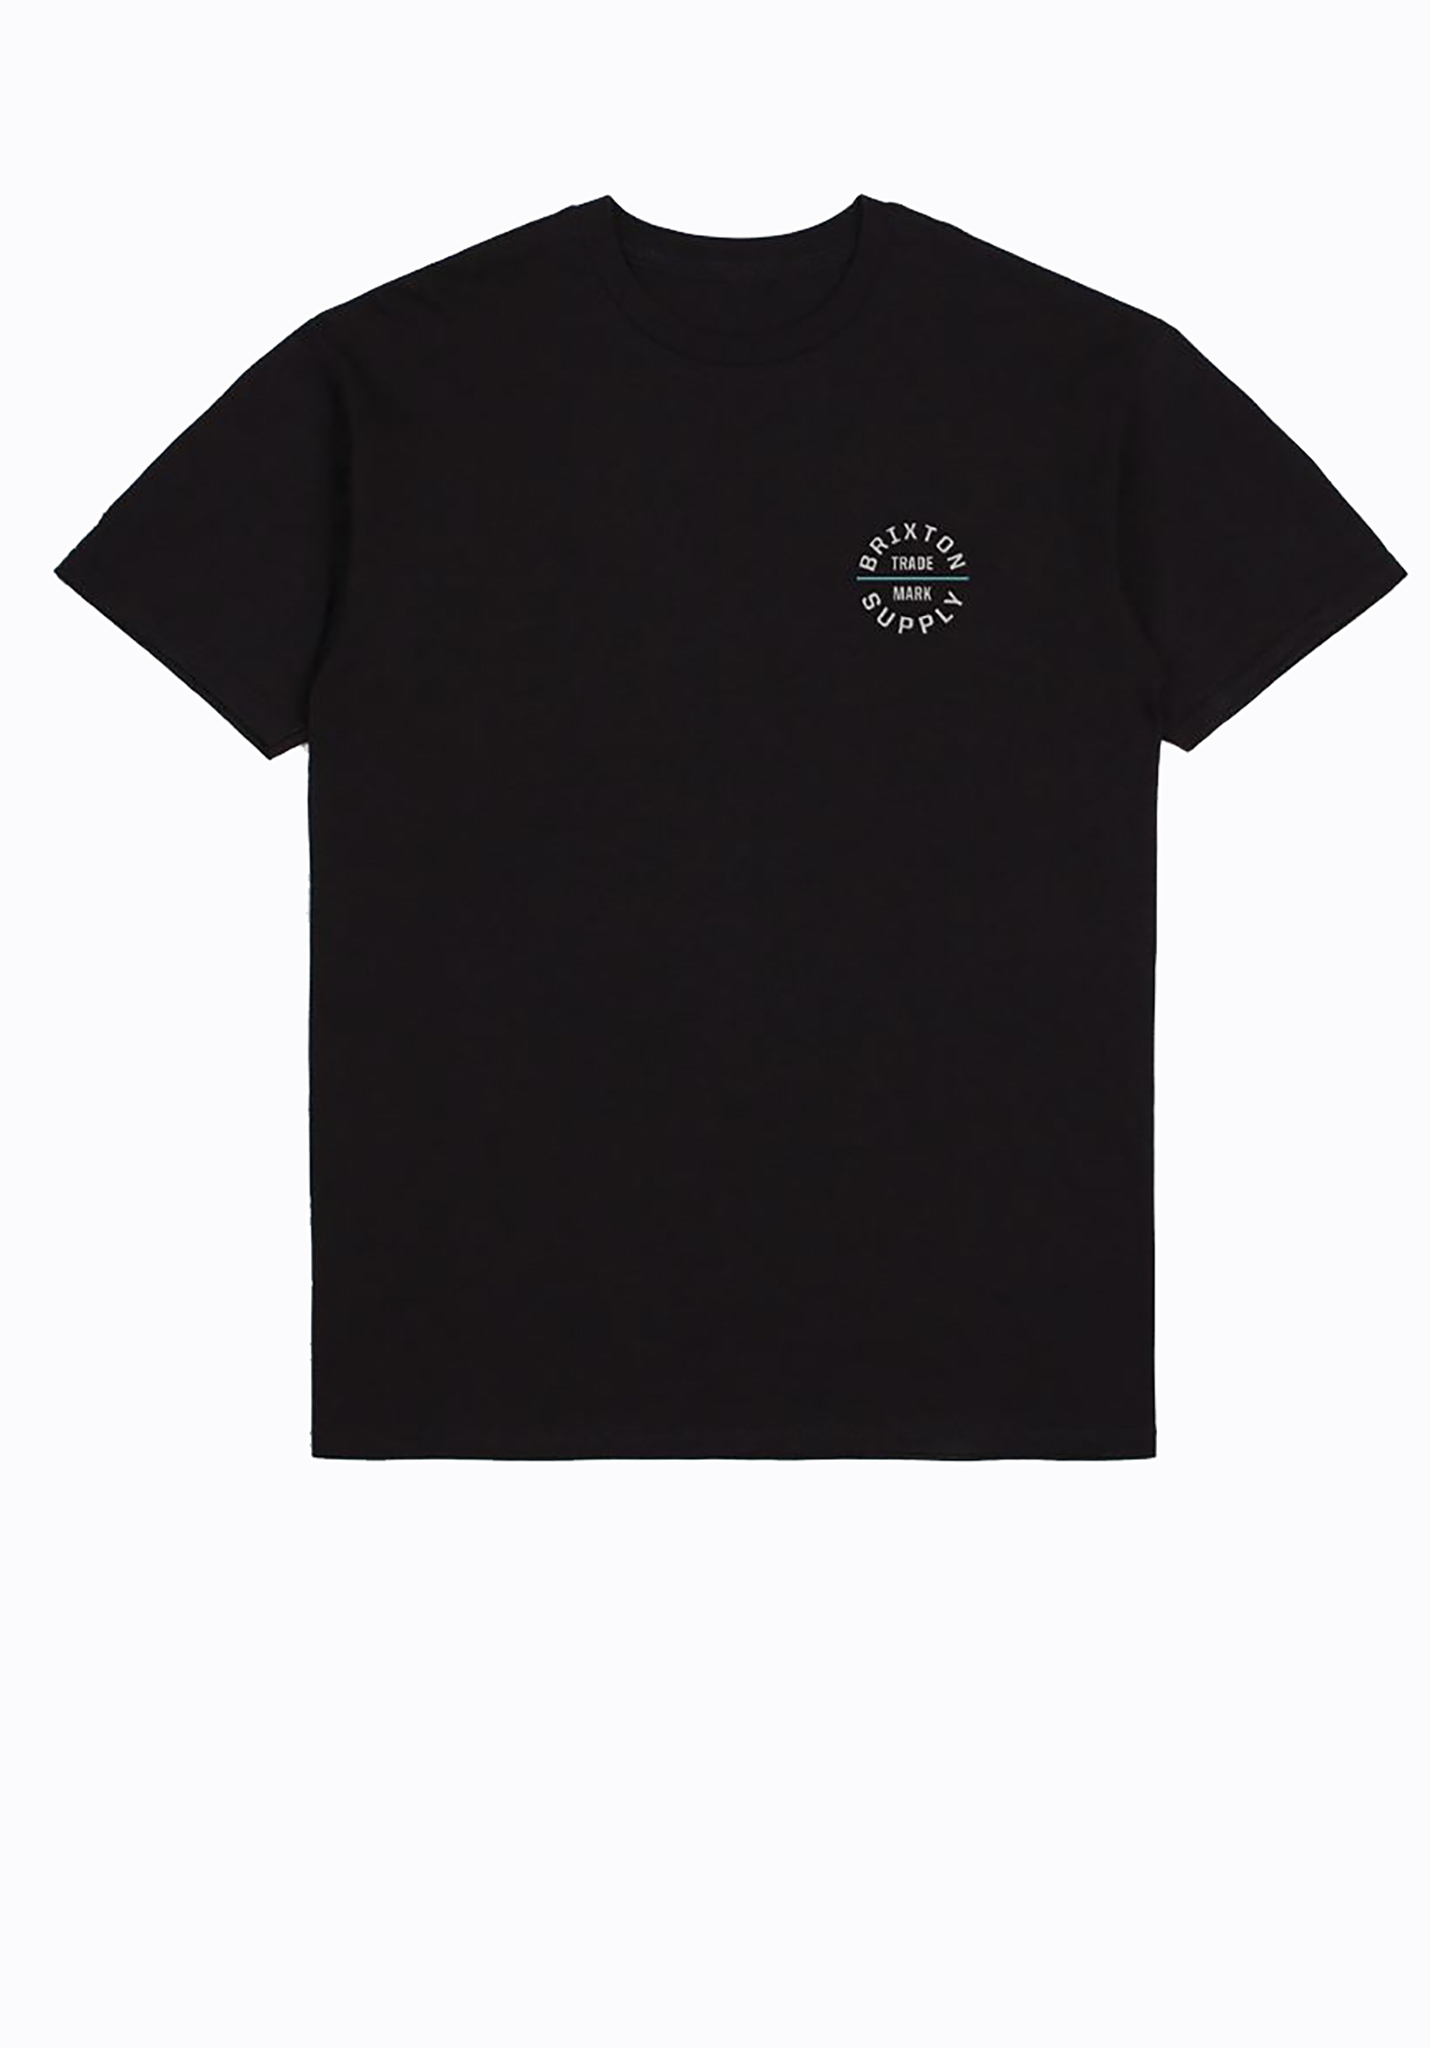 Brixton Oath V T-Shirt schwarz/creme M